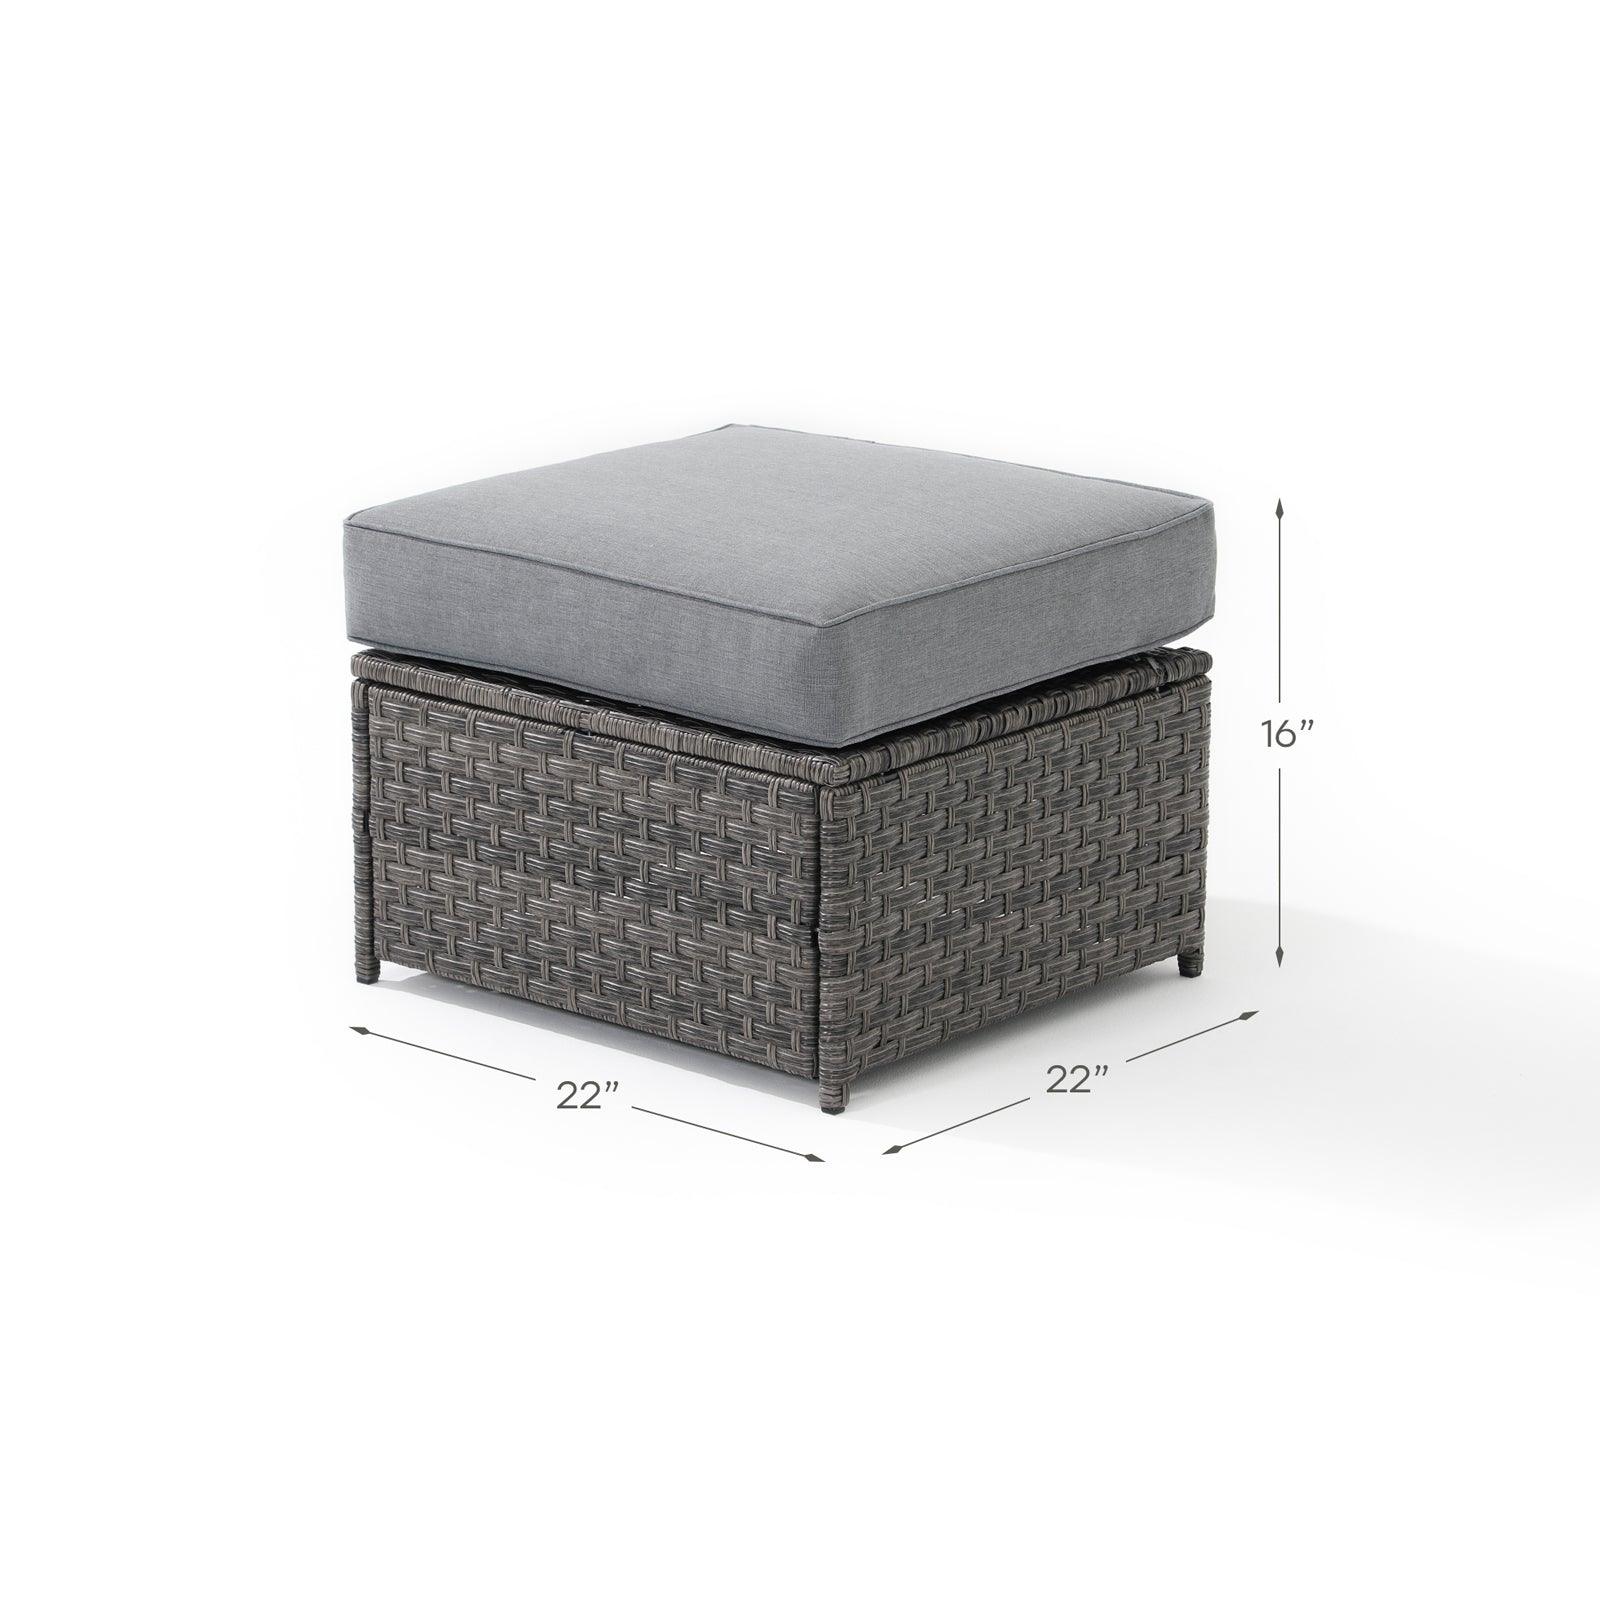 Ayia ottoman with grey rattan design,  grey  cushions, dimension information  - Jardina Furniture #color_Grey